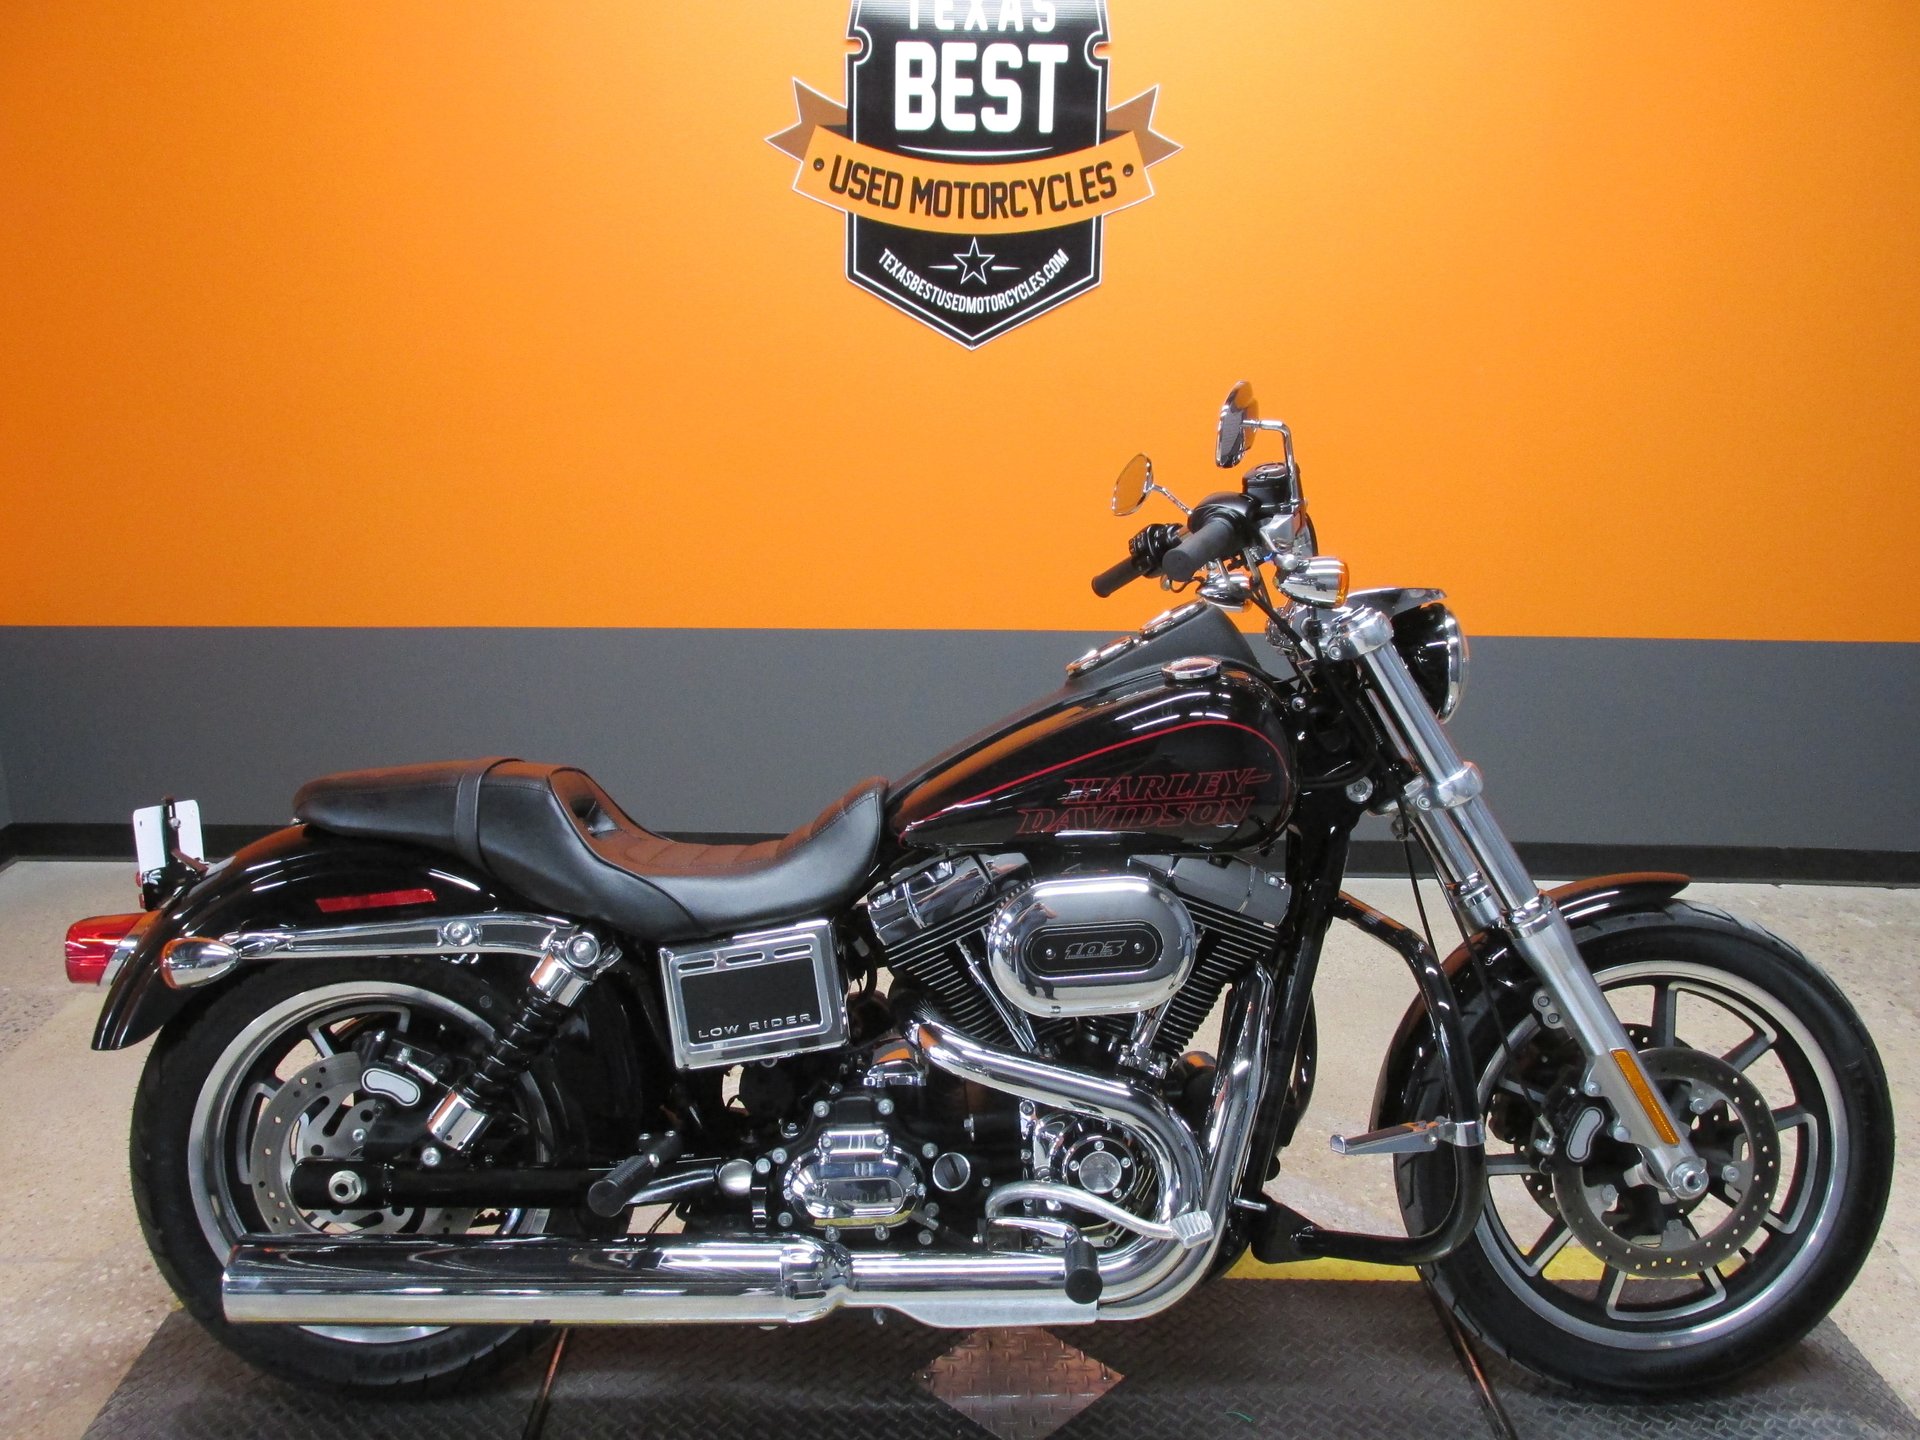 2016 Harley-Davidson Dyna Low Rider | American Motorcycle Trading Company -  Used Harley Davidson Motorcycles